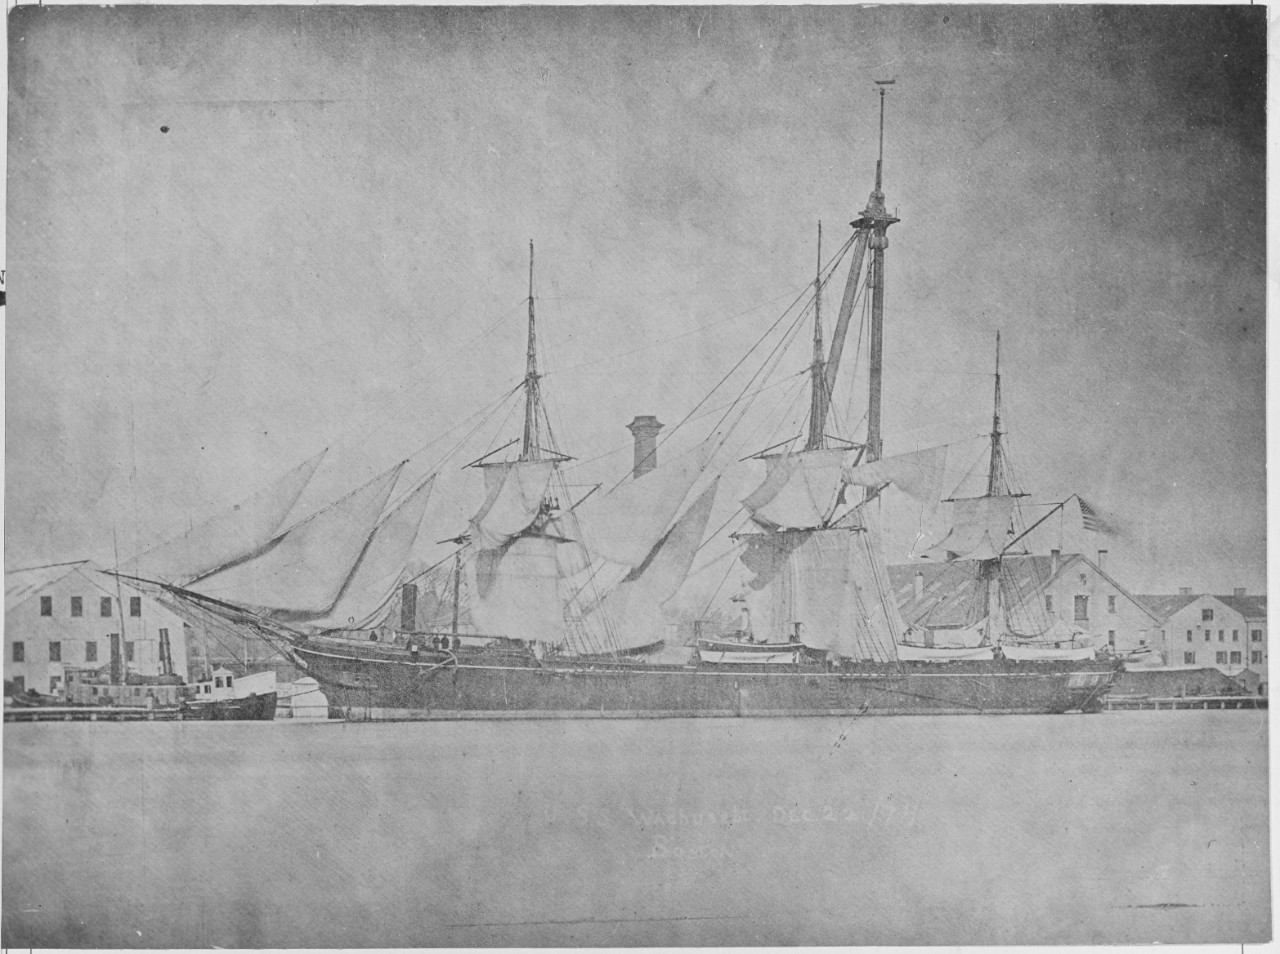 Photo #: NH 59938  USS Wachusett (1862-1887)